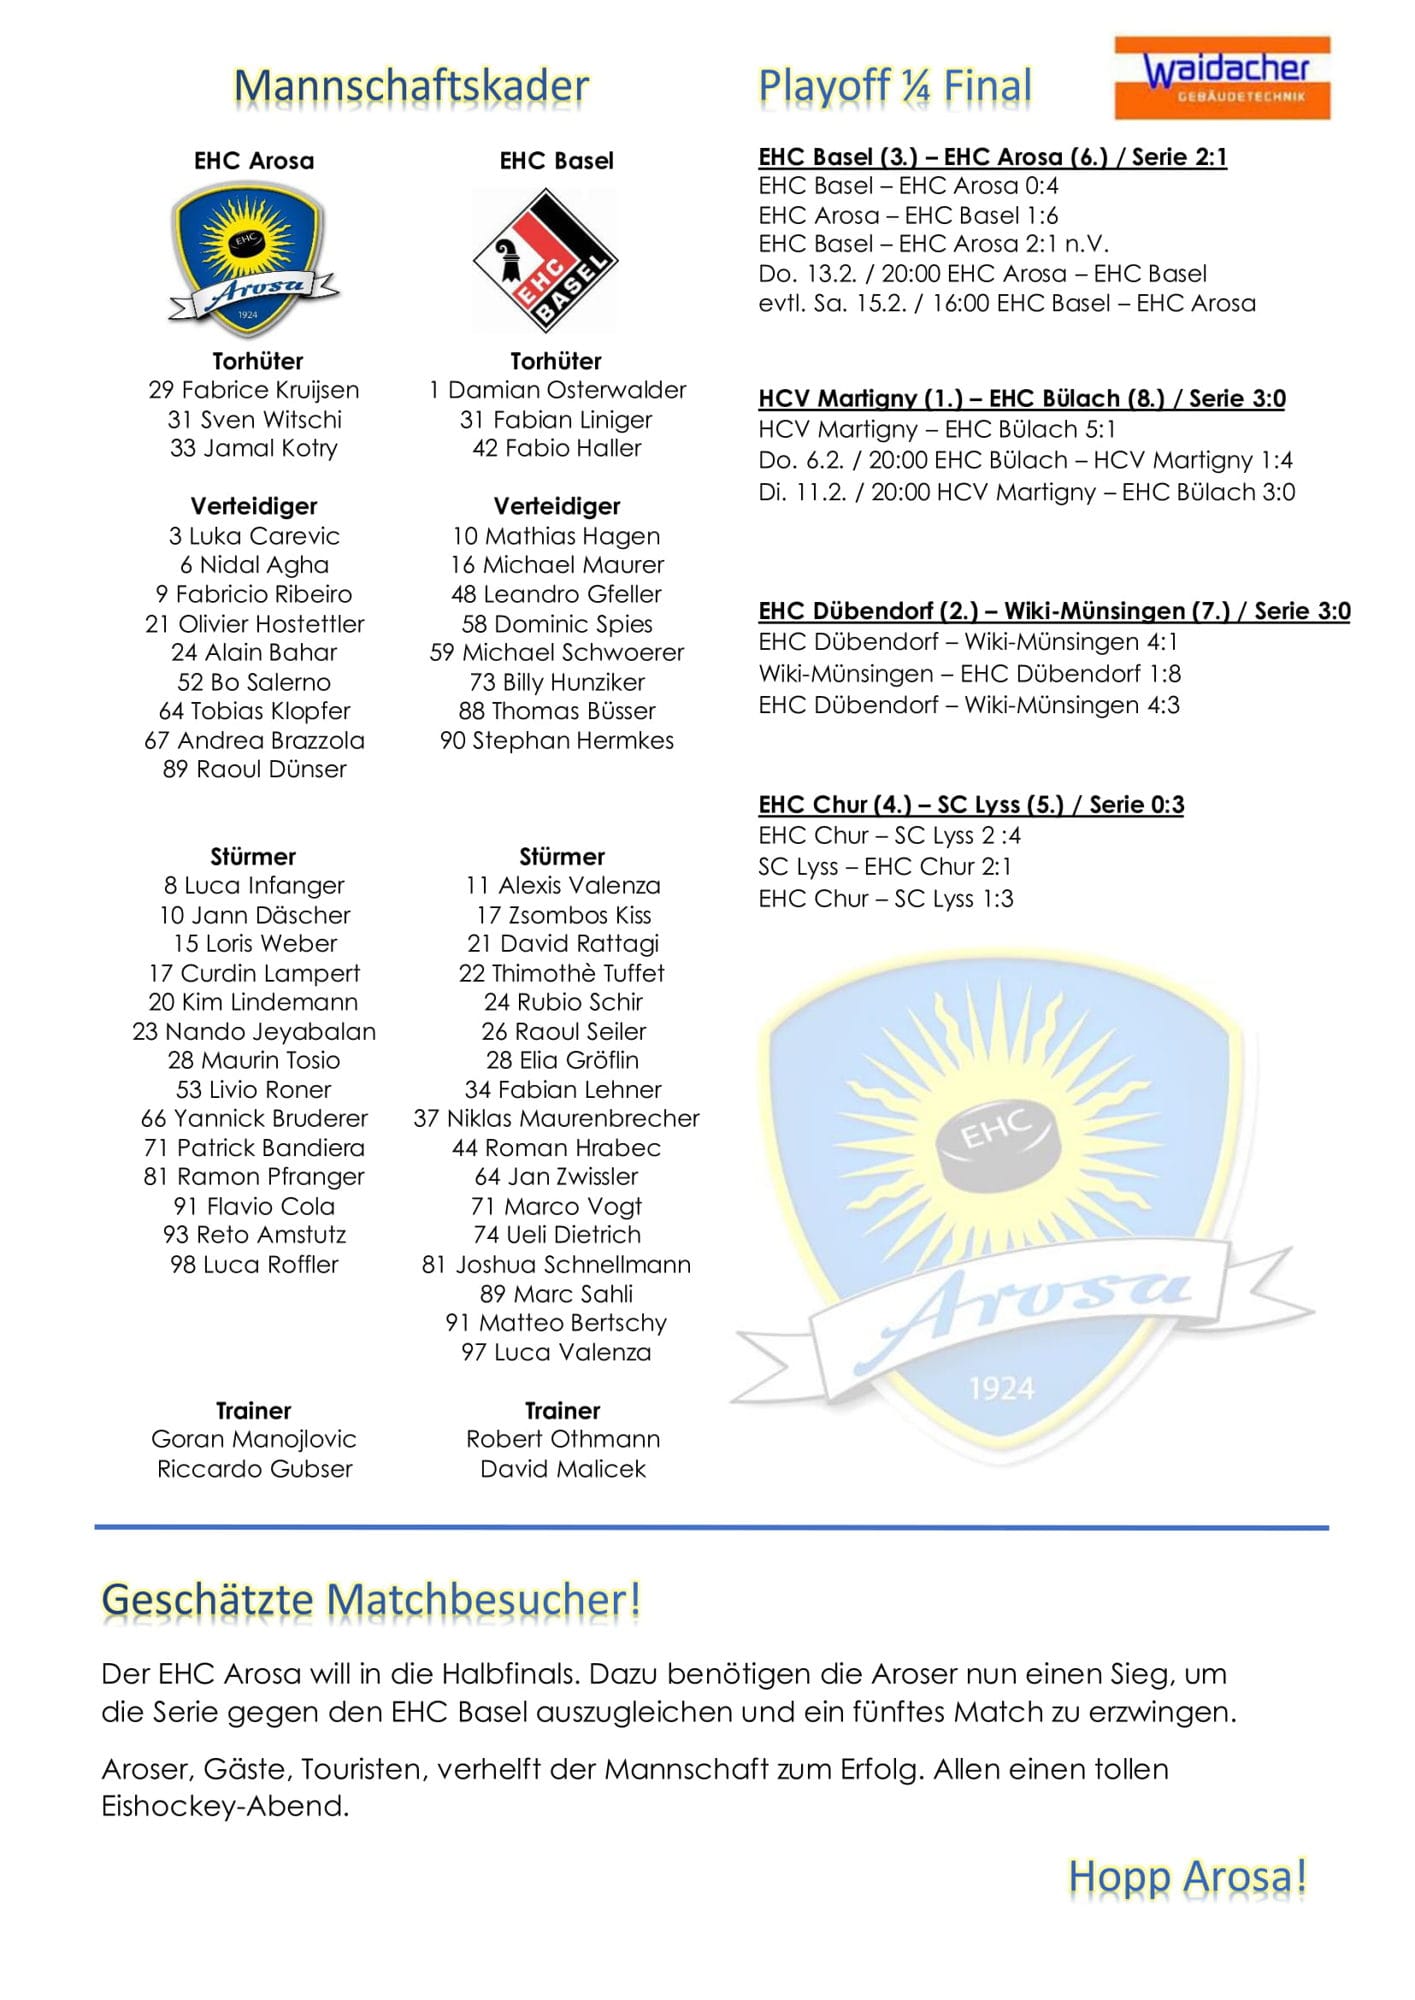 Playoff-Matchflyer EHC Arosa - EHC Basel, Seite 2